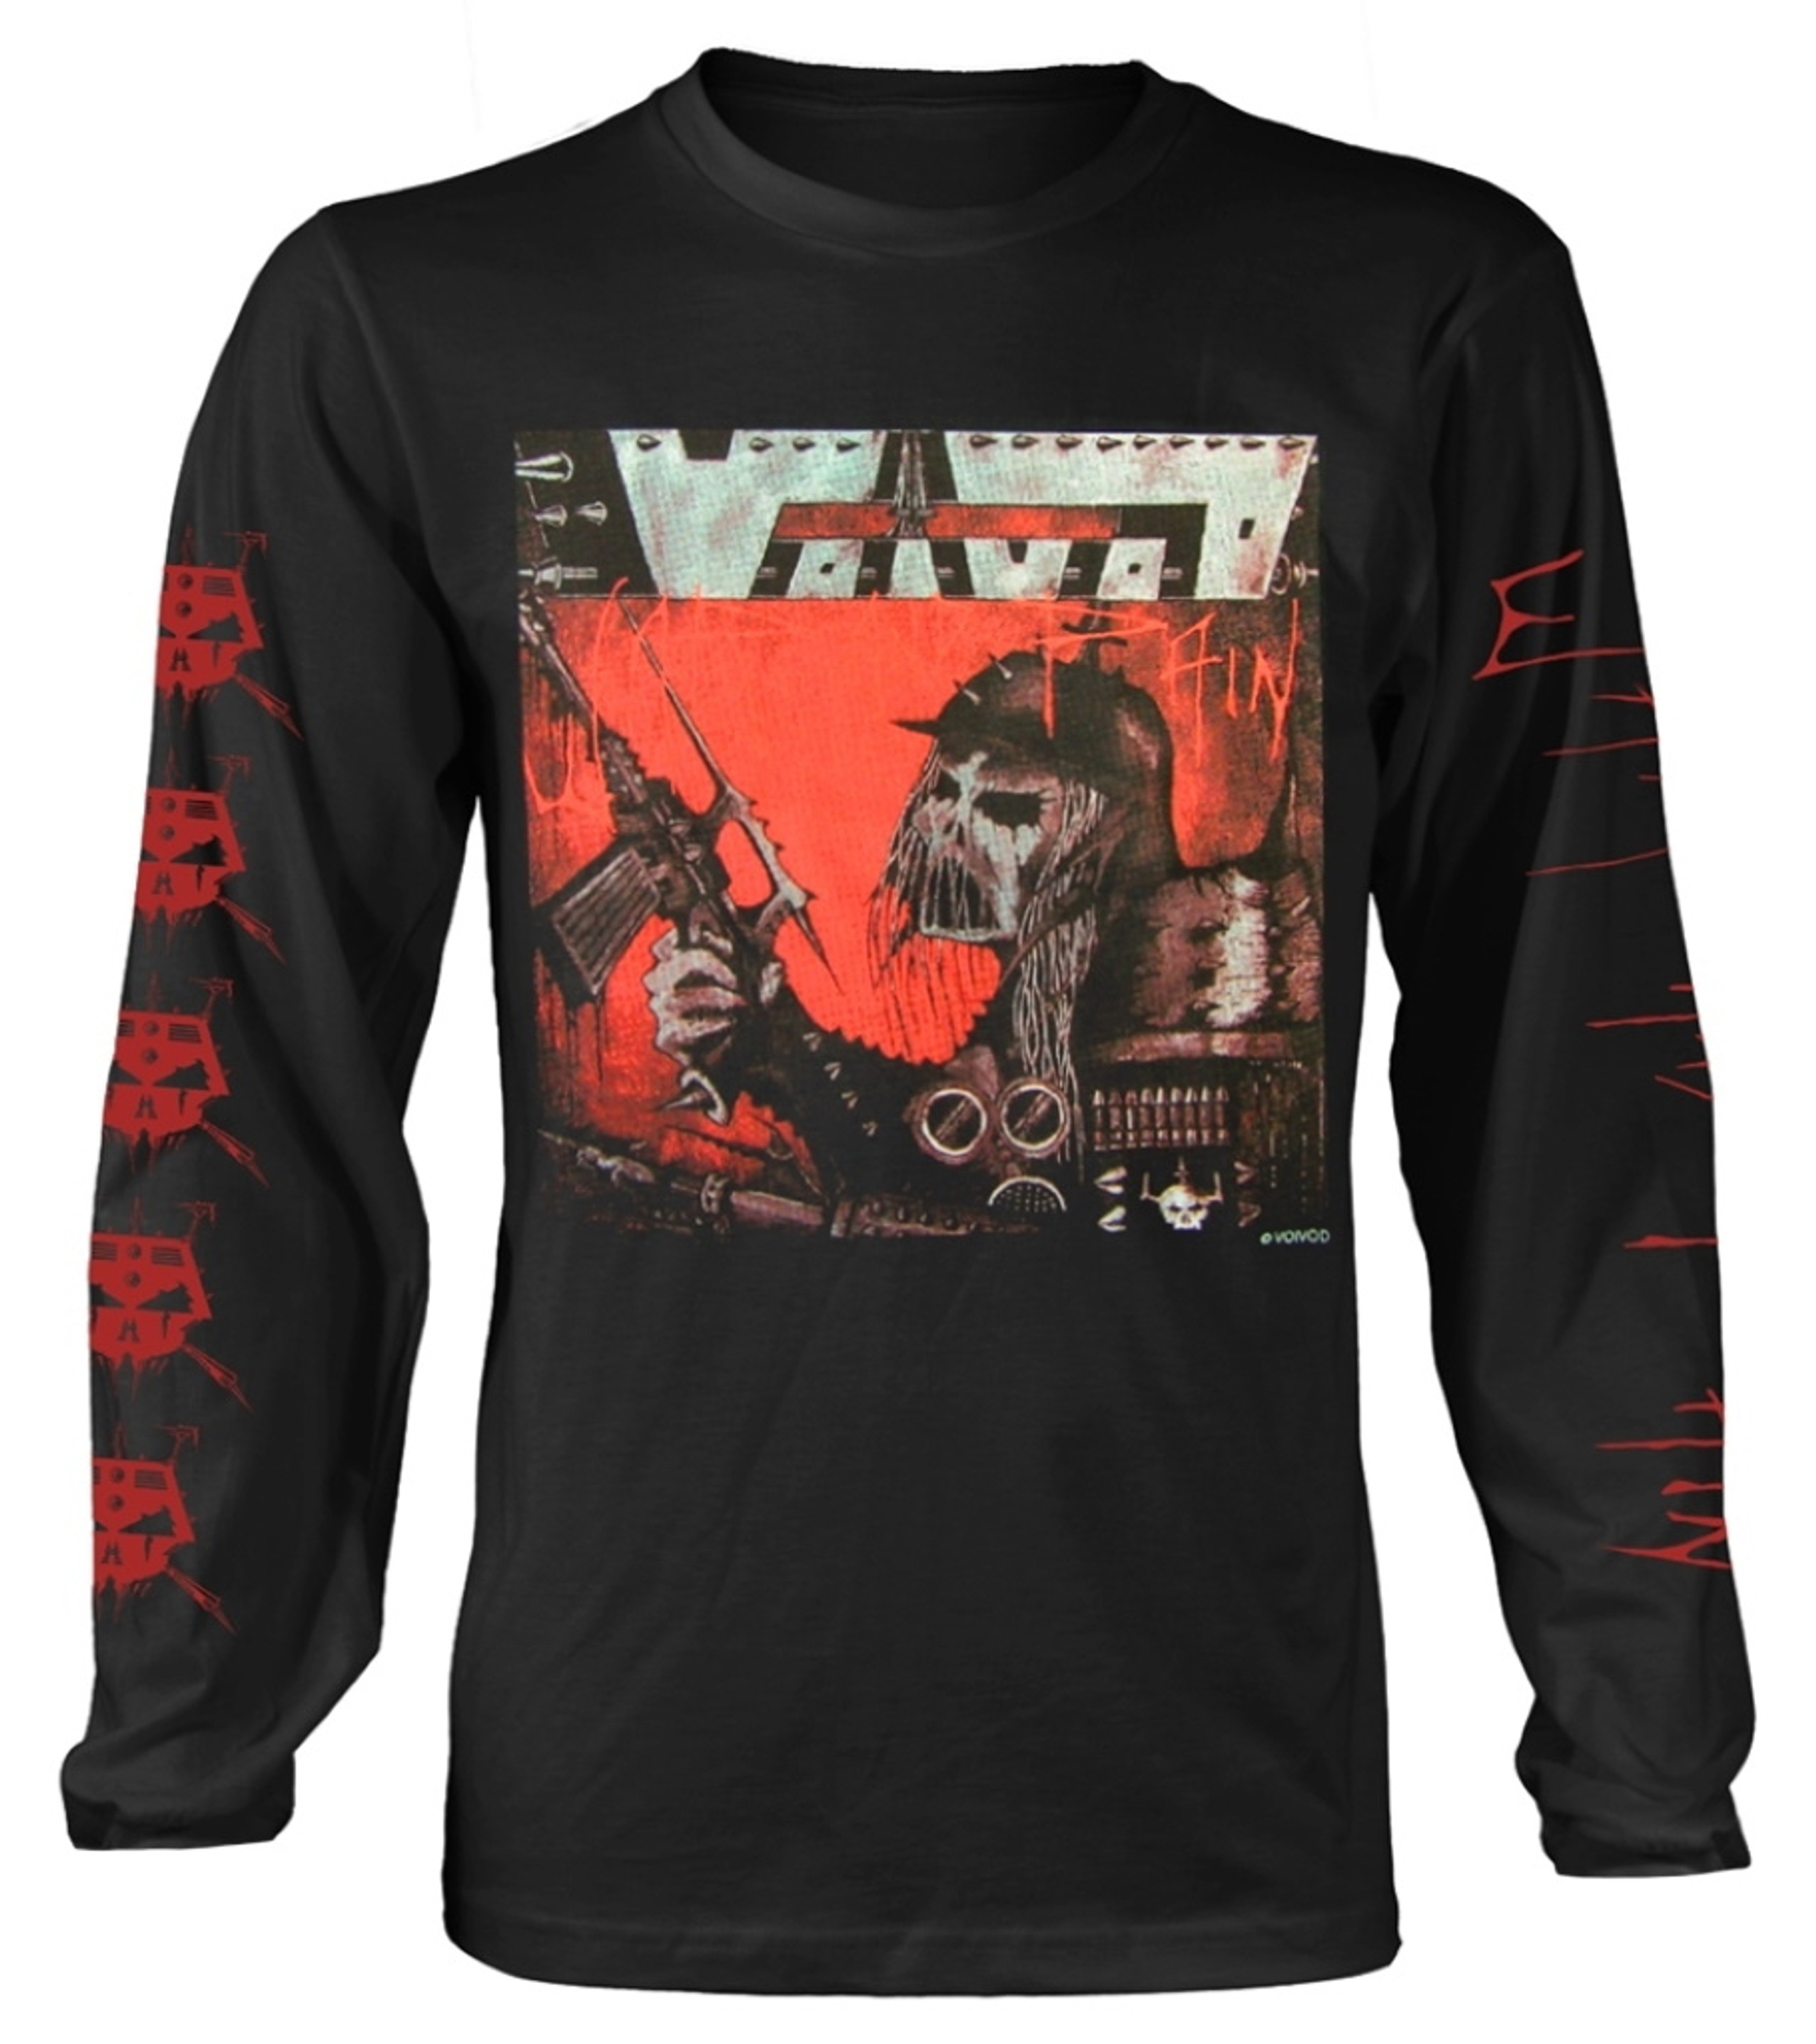 Voivod 'War & Pain' (Black) Long Sleeve Shirt